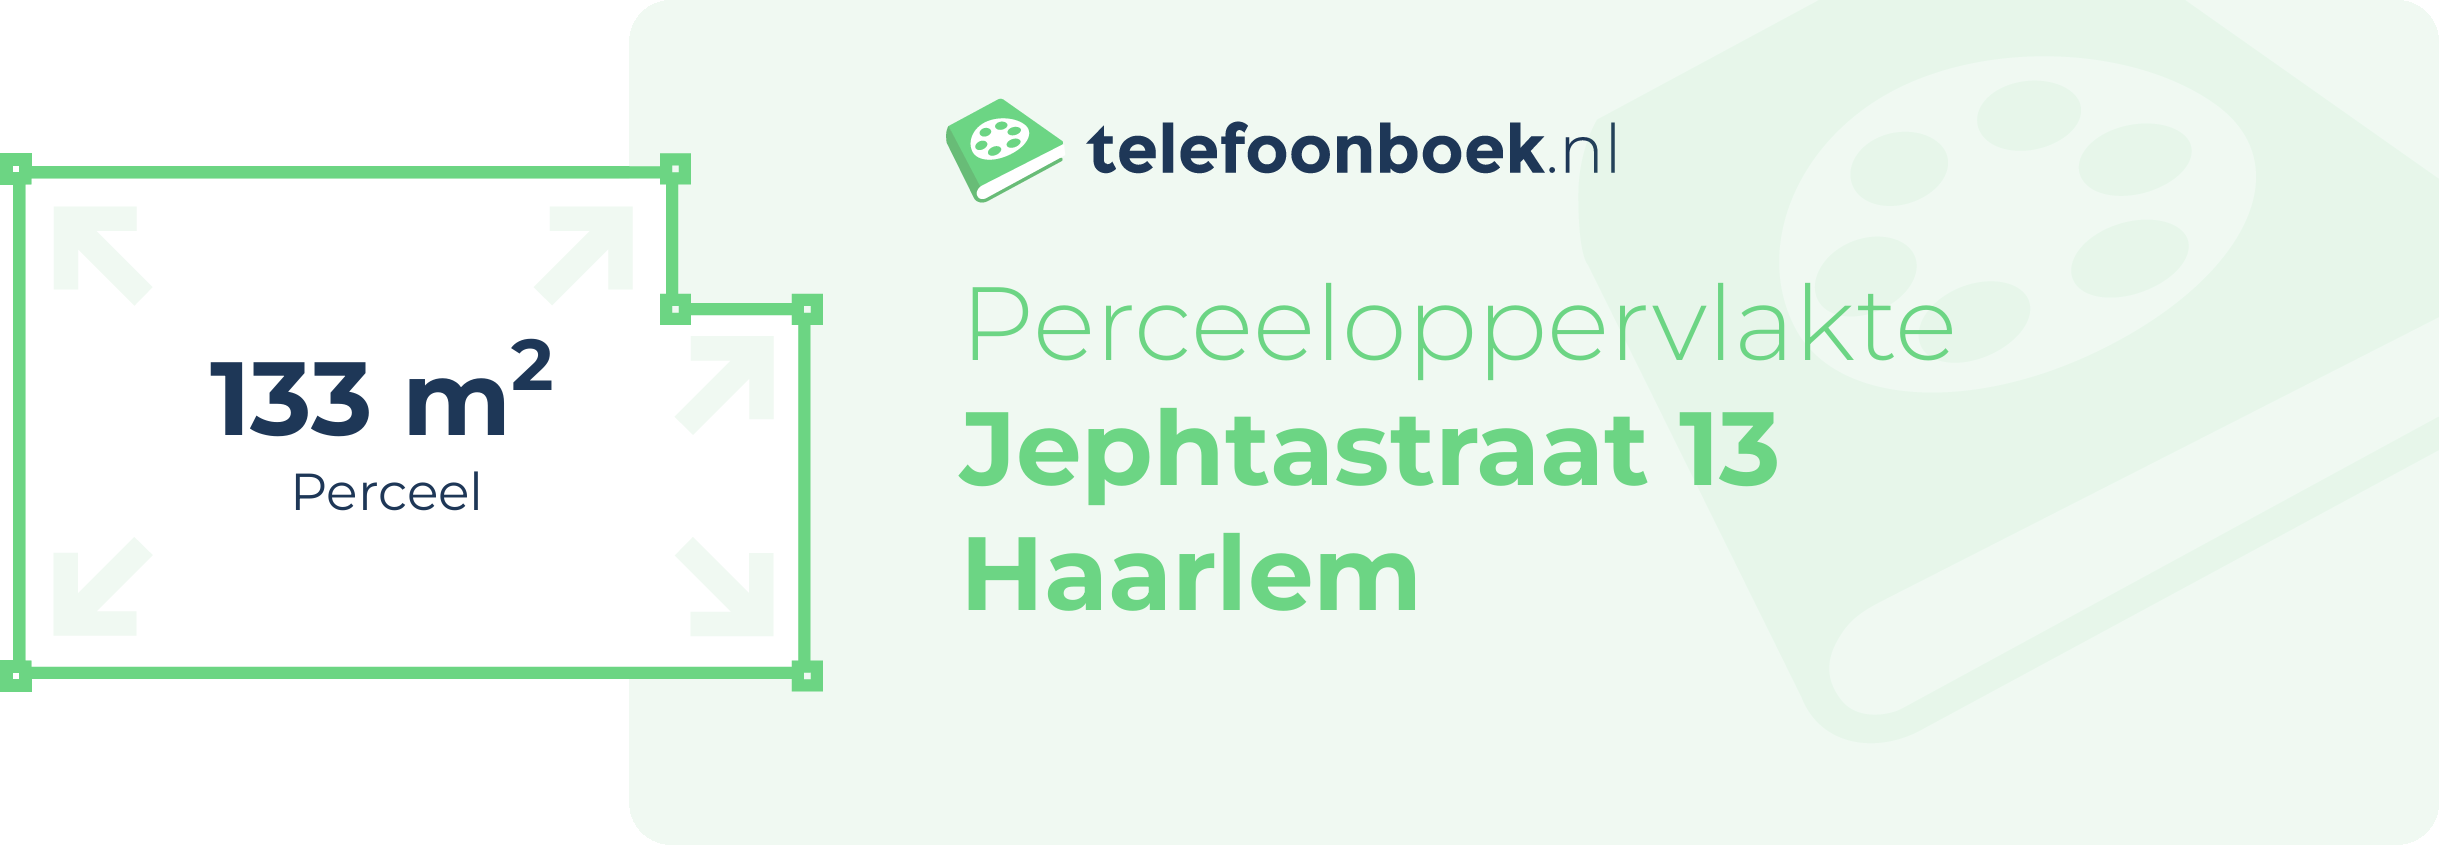 Perceeloppervlakte Jephtastraat 13 Haarlem